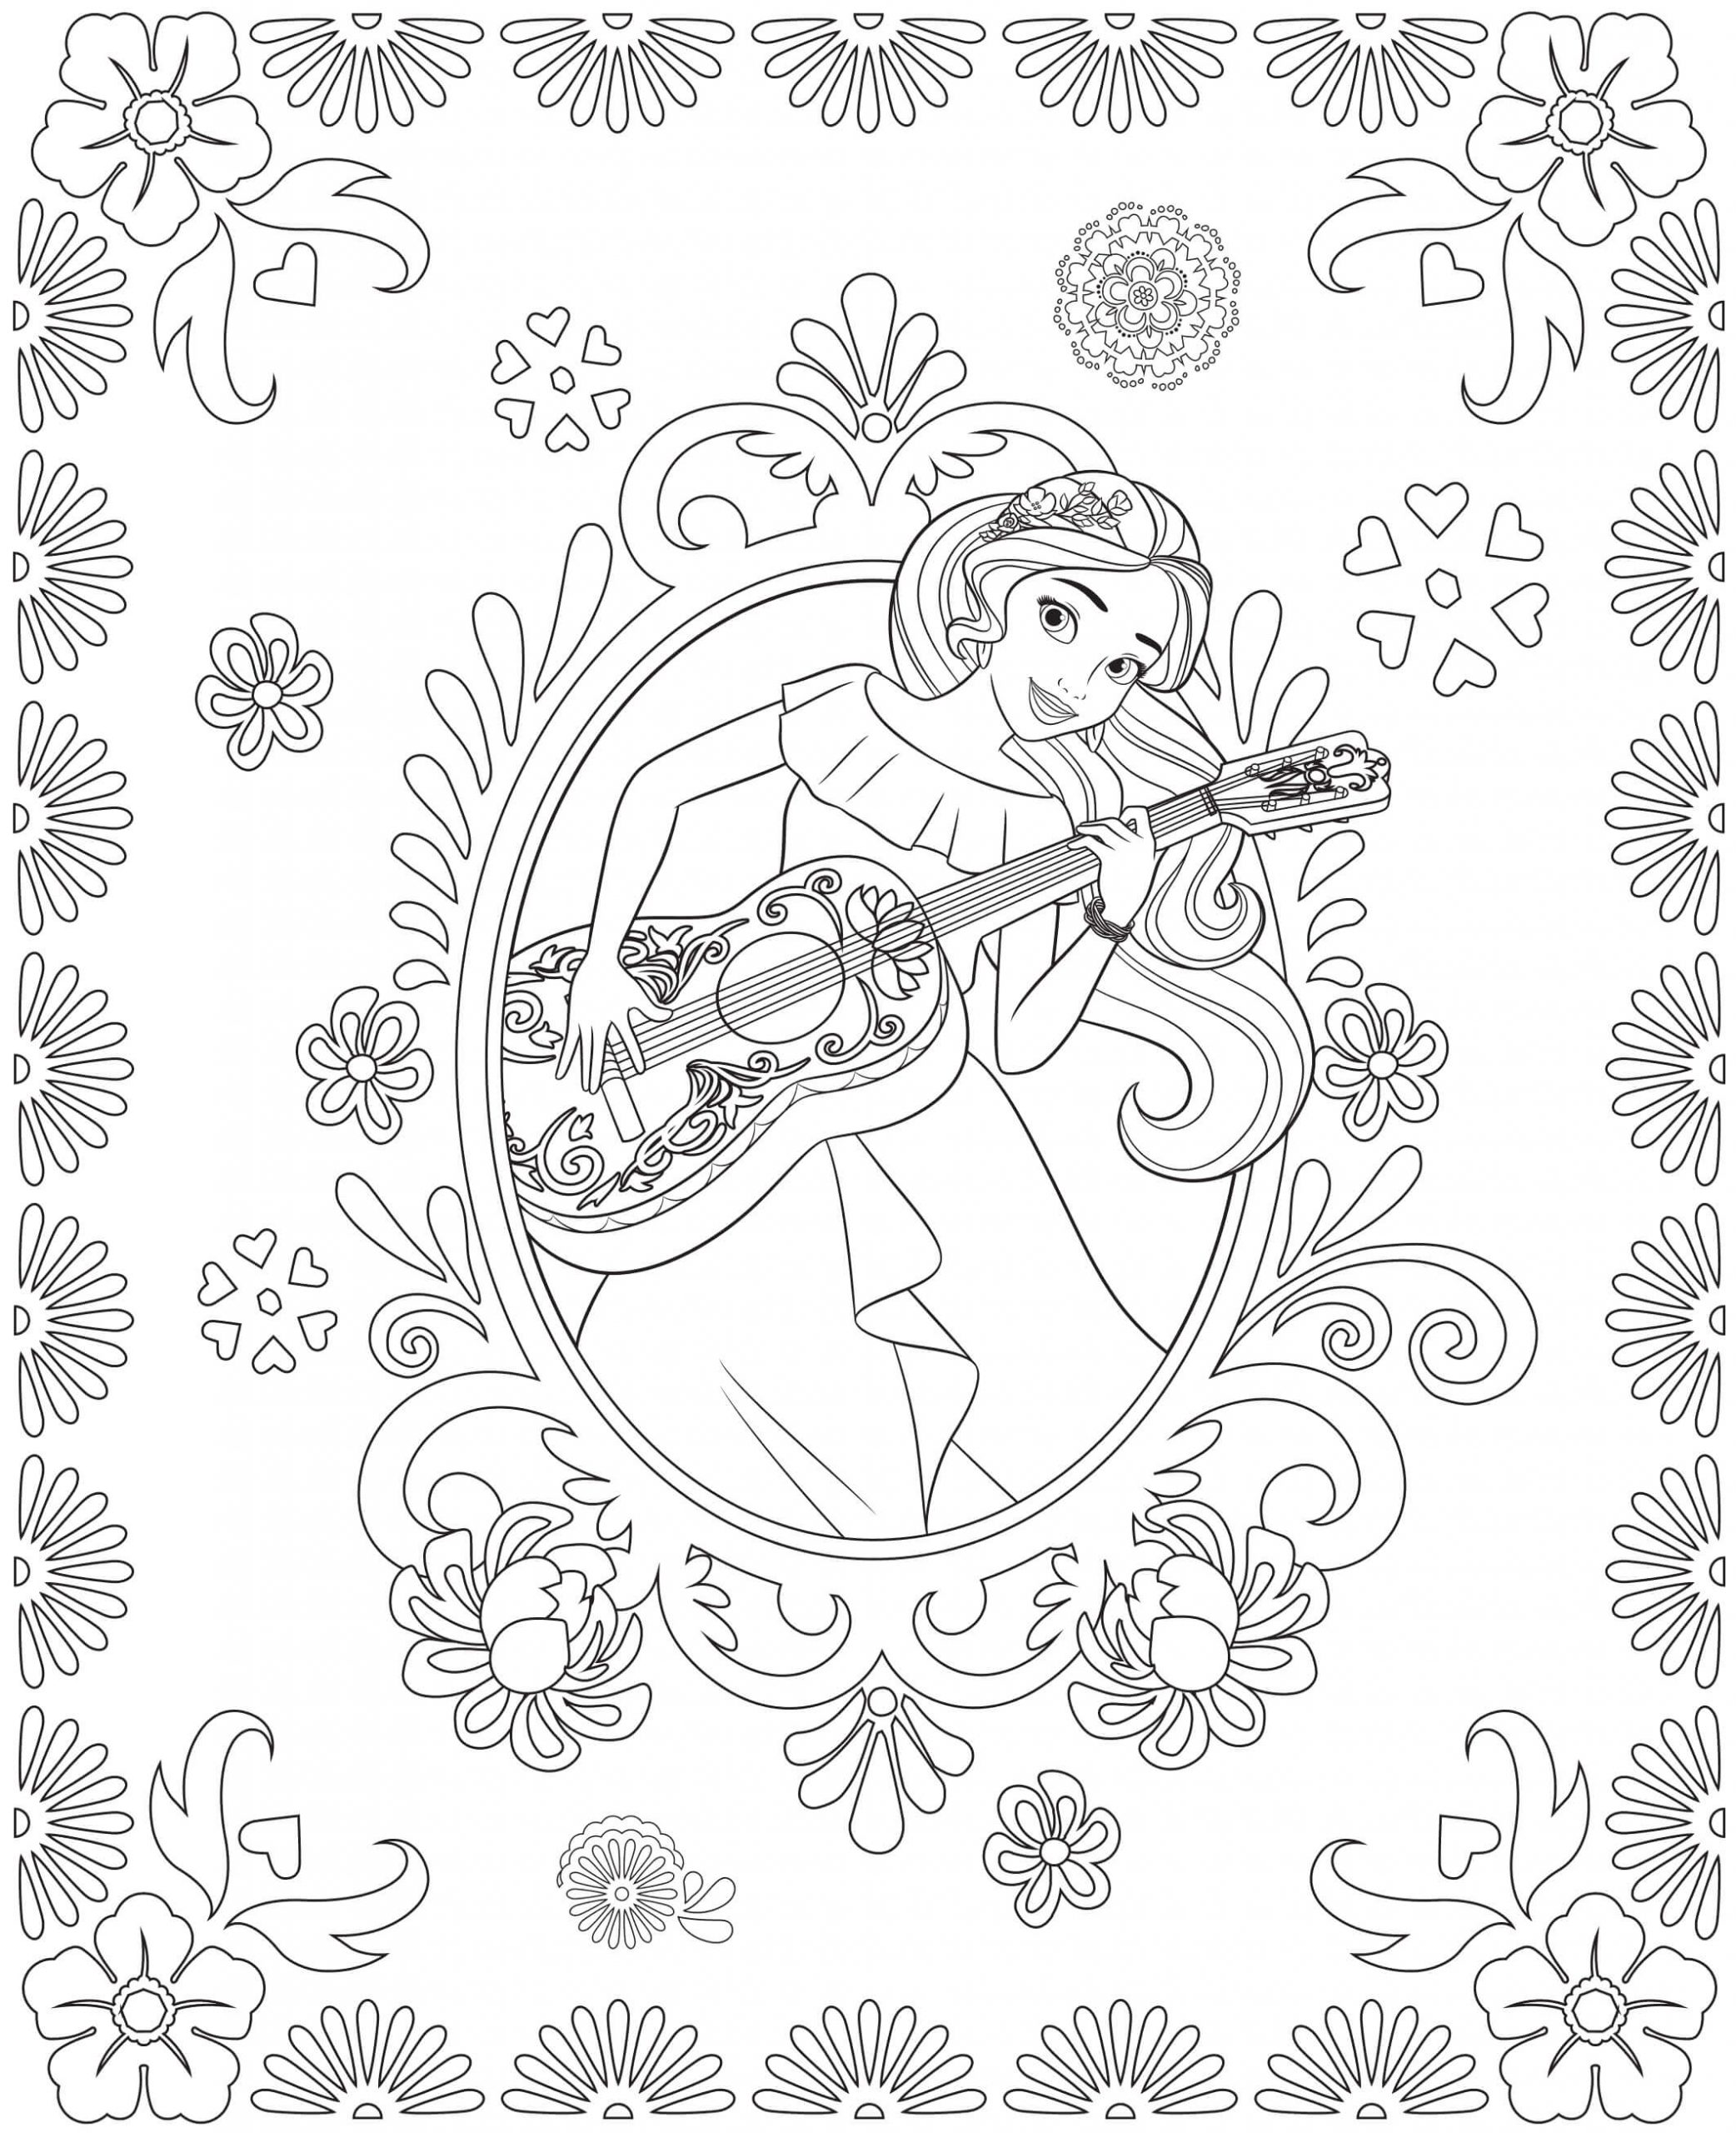 Prinzessin Elena und Storytime-Gitarre